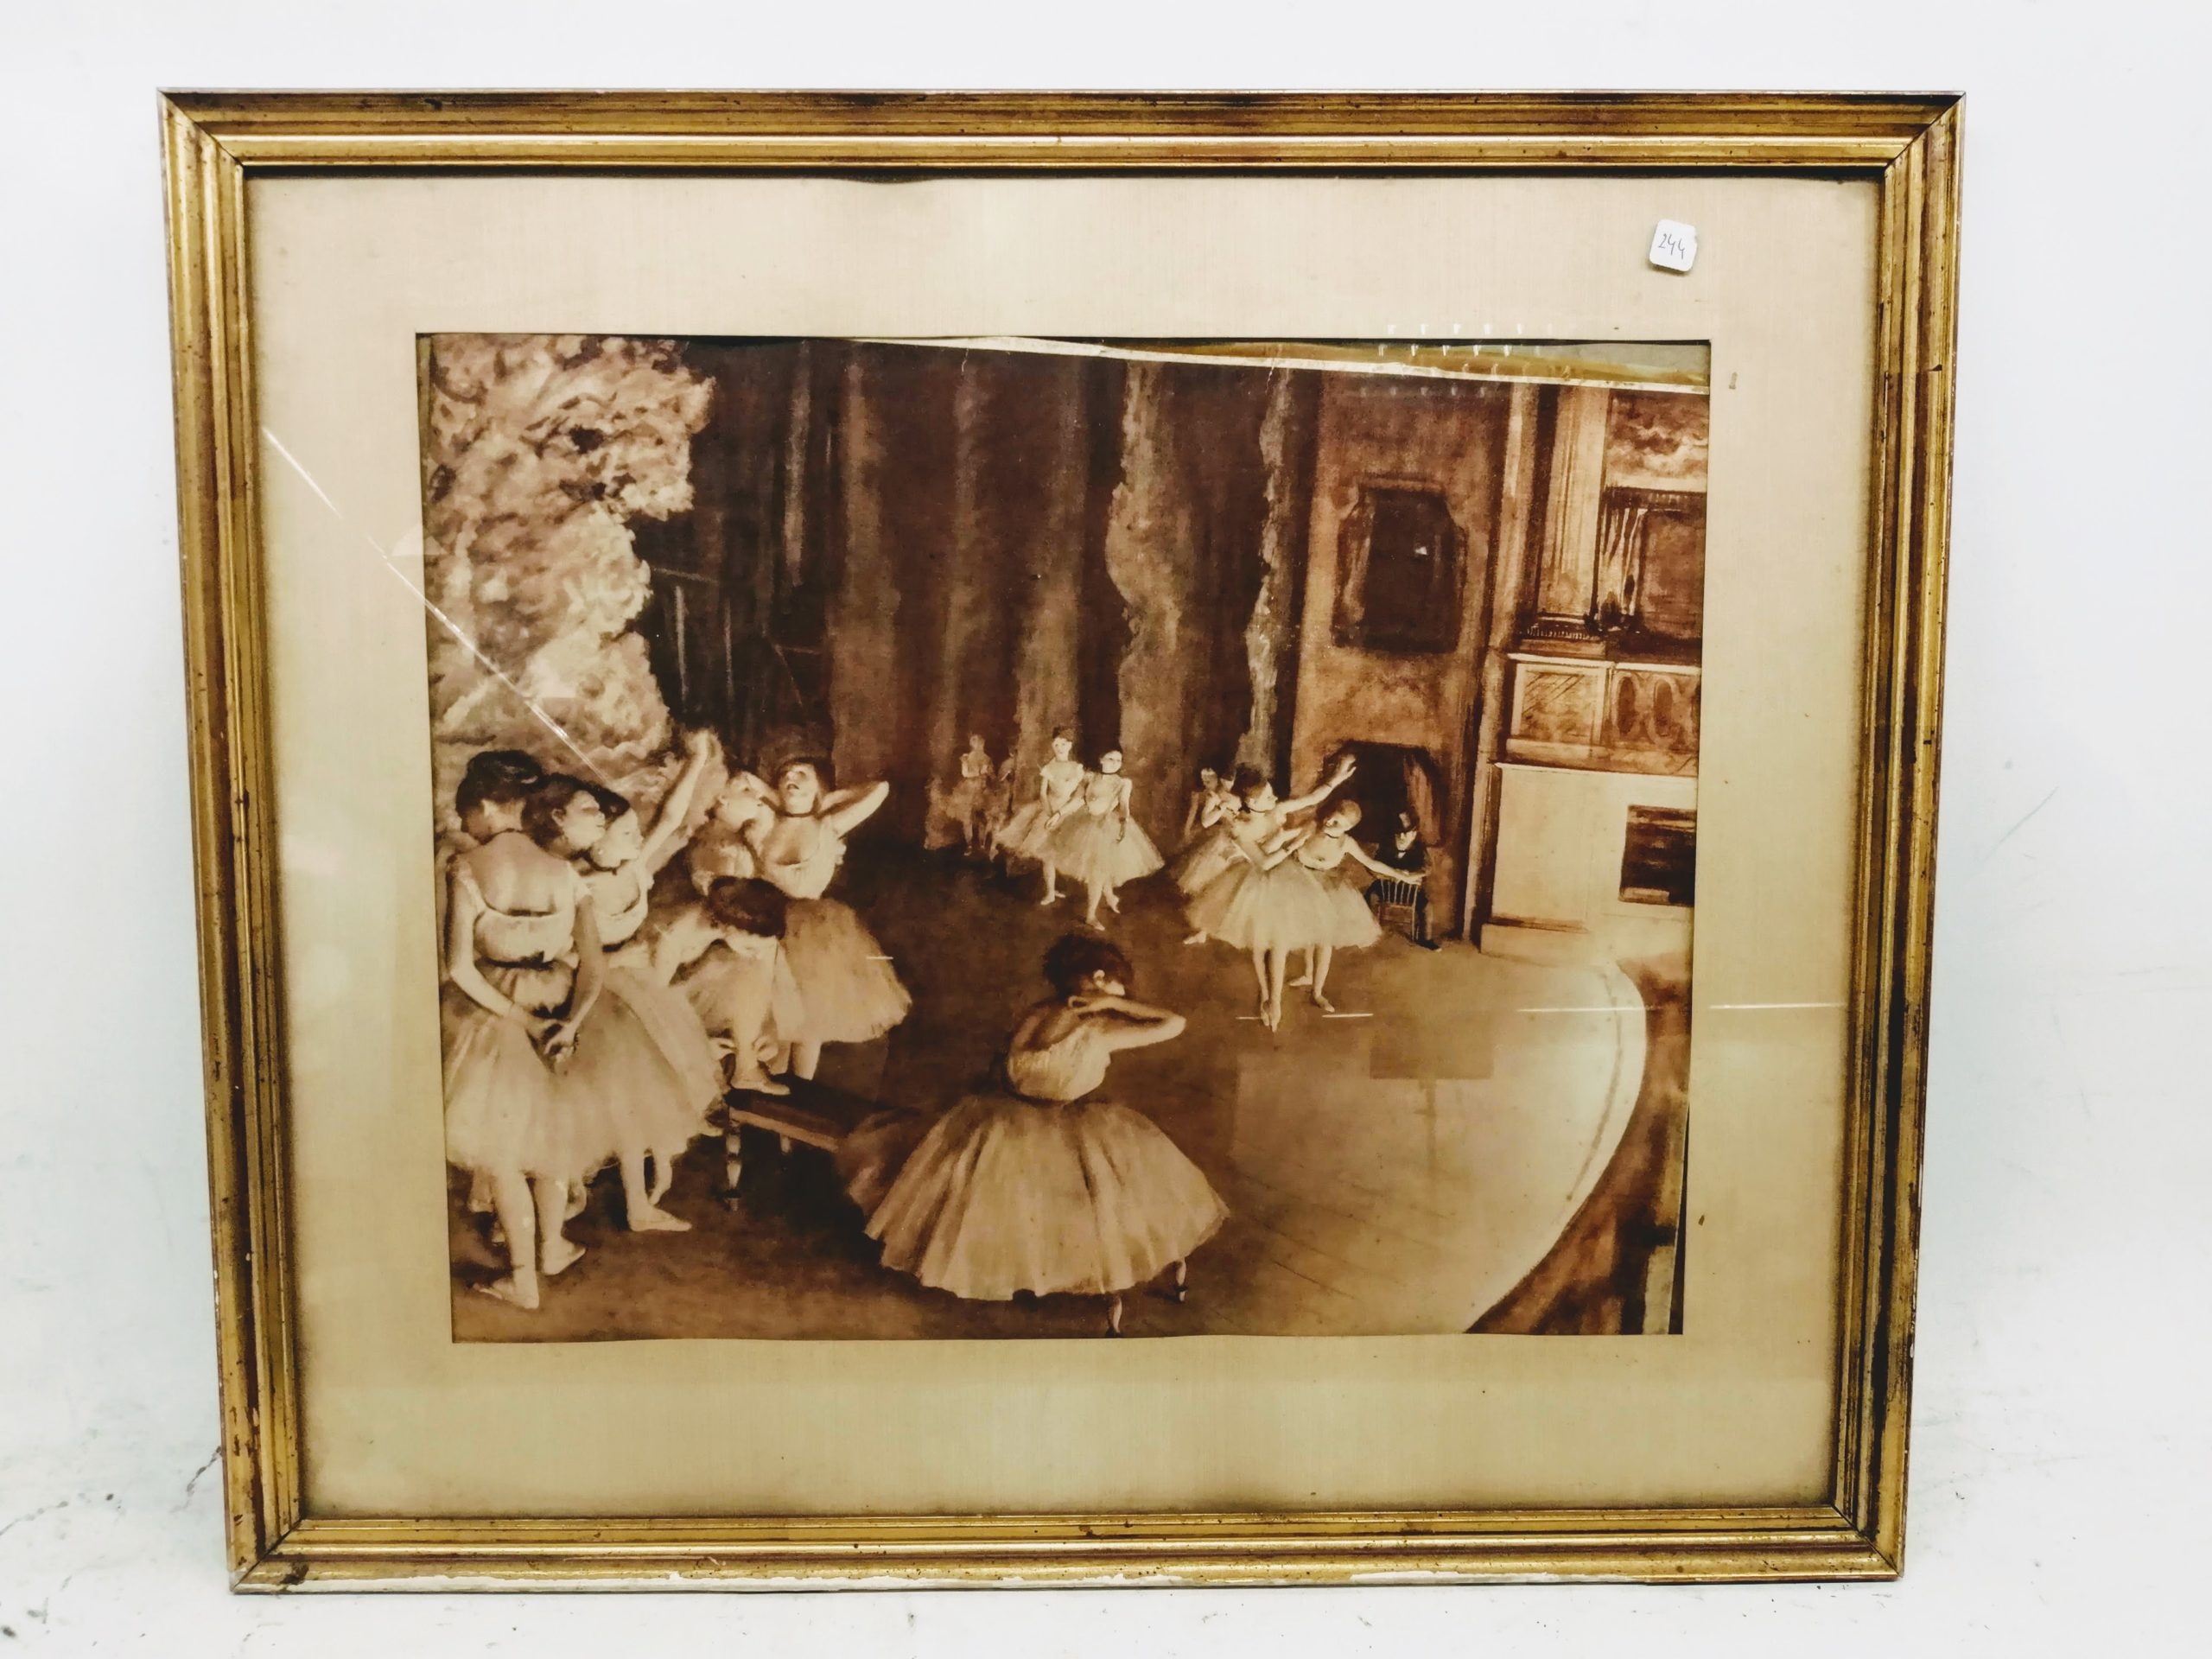 Bailarinas by Edgar Degas